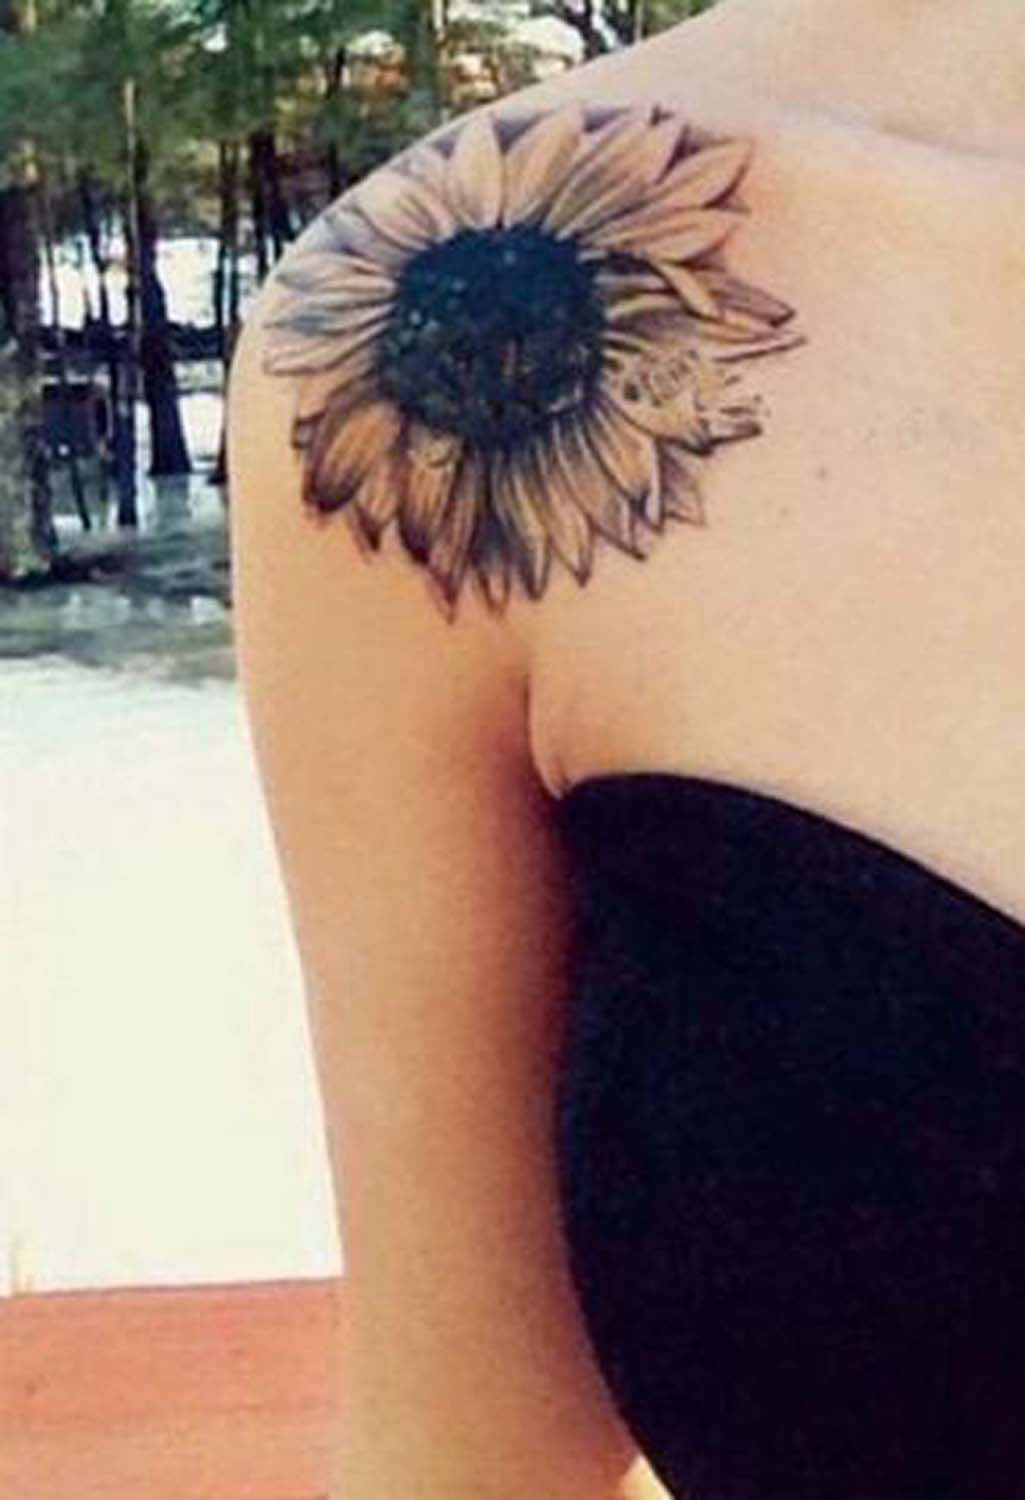 Sunflower Tattoo Ideas To Express Your Sunny Nature  Glaminati